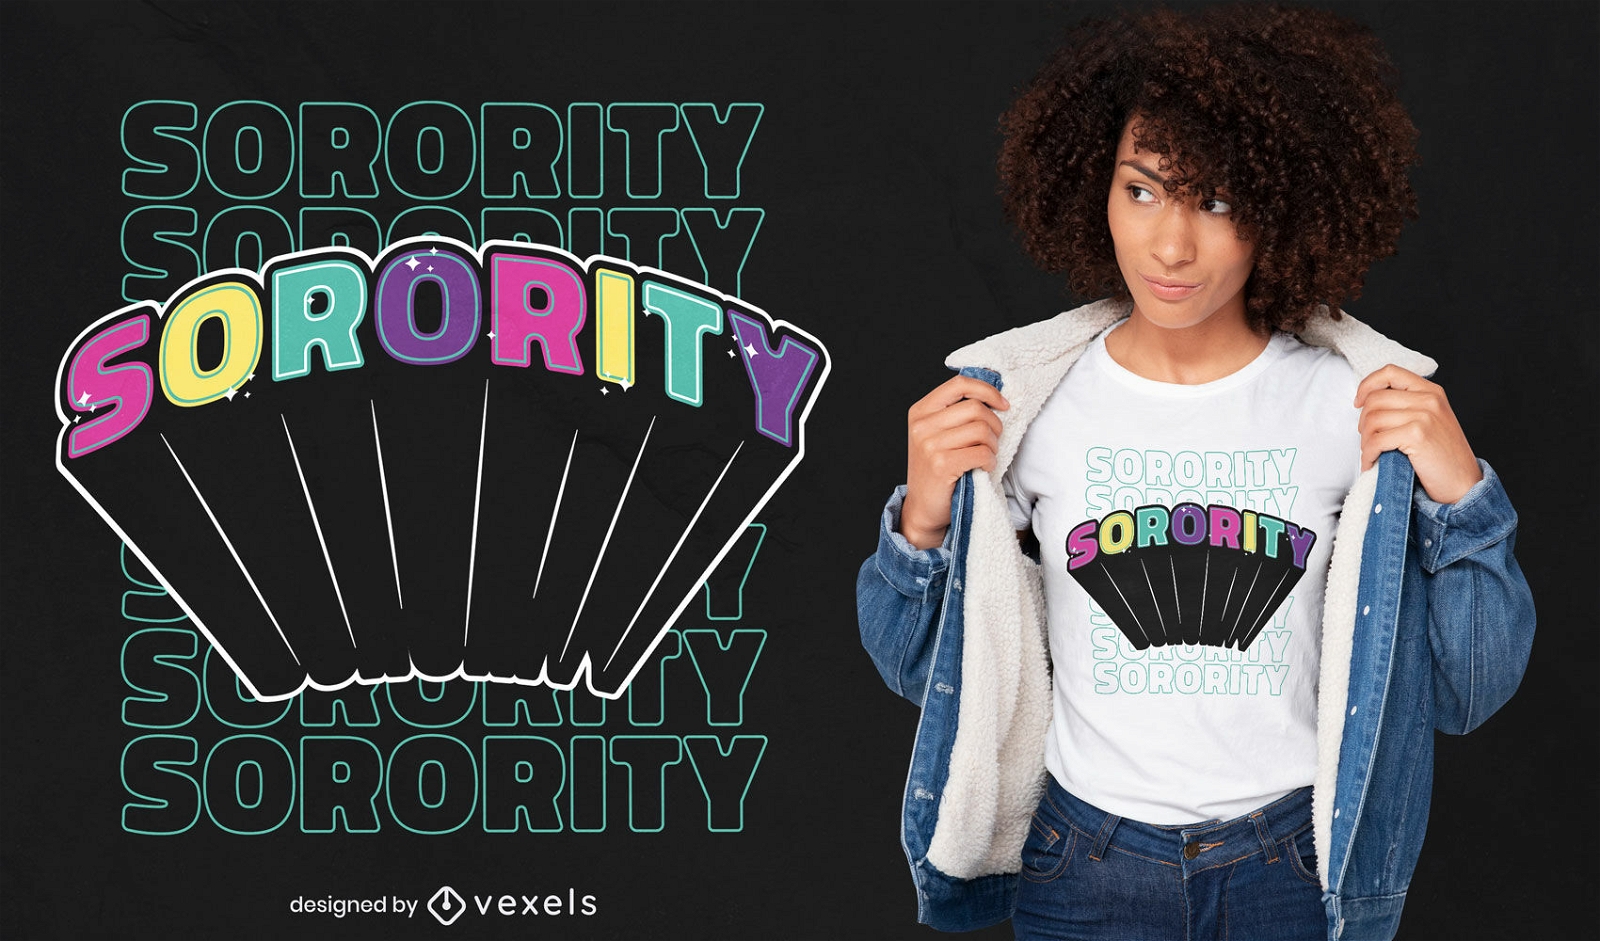 Sorority feministisches T-Shirt-Design